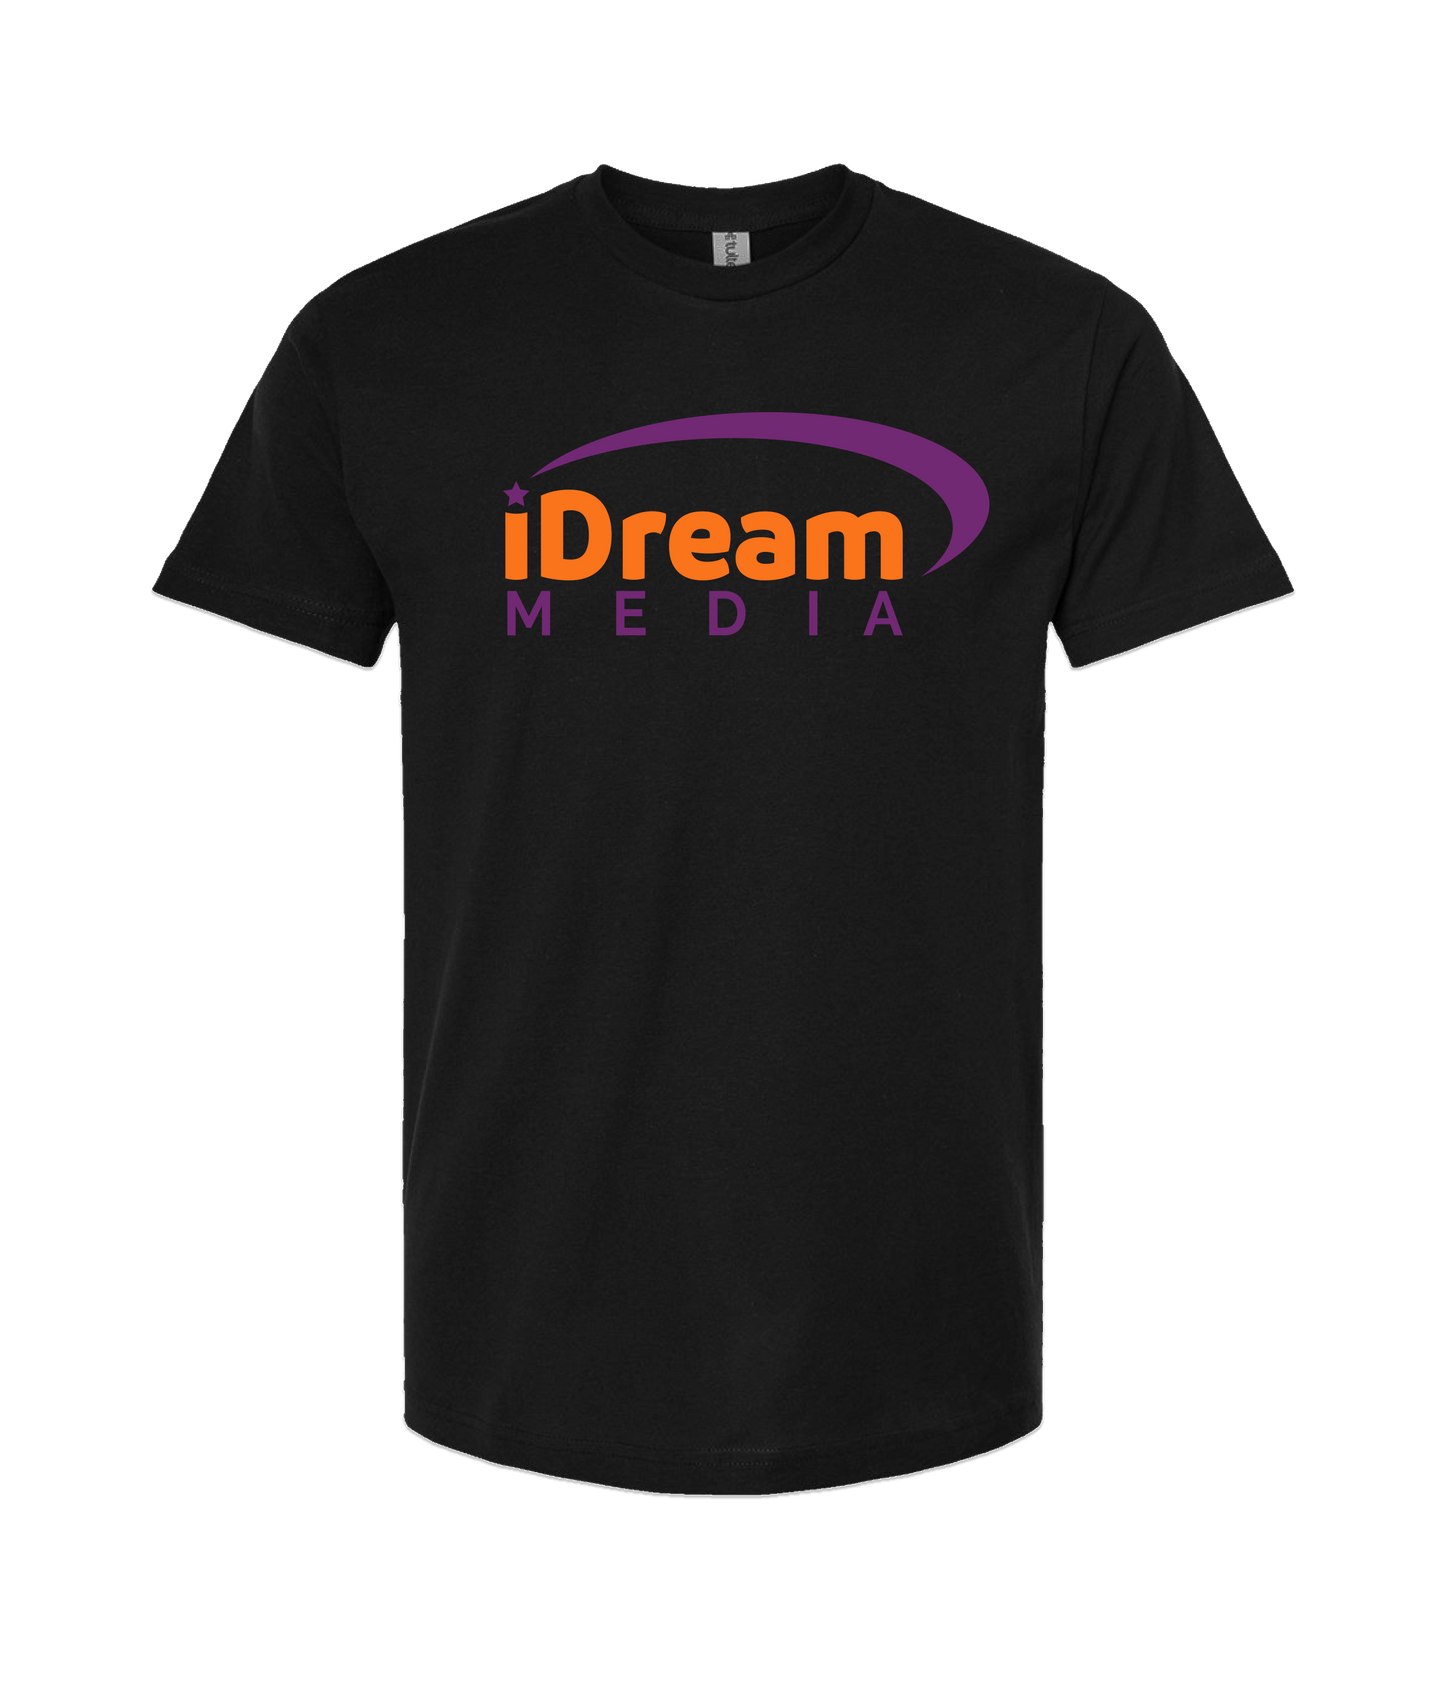 Je Vaughn Show - iDream Media Logo - Black T Shirt